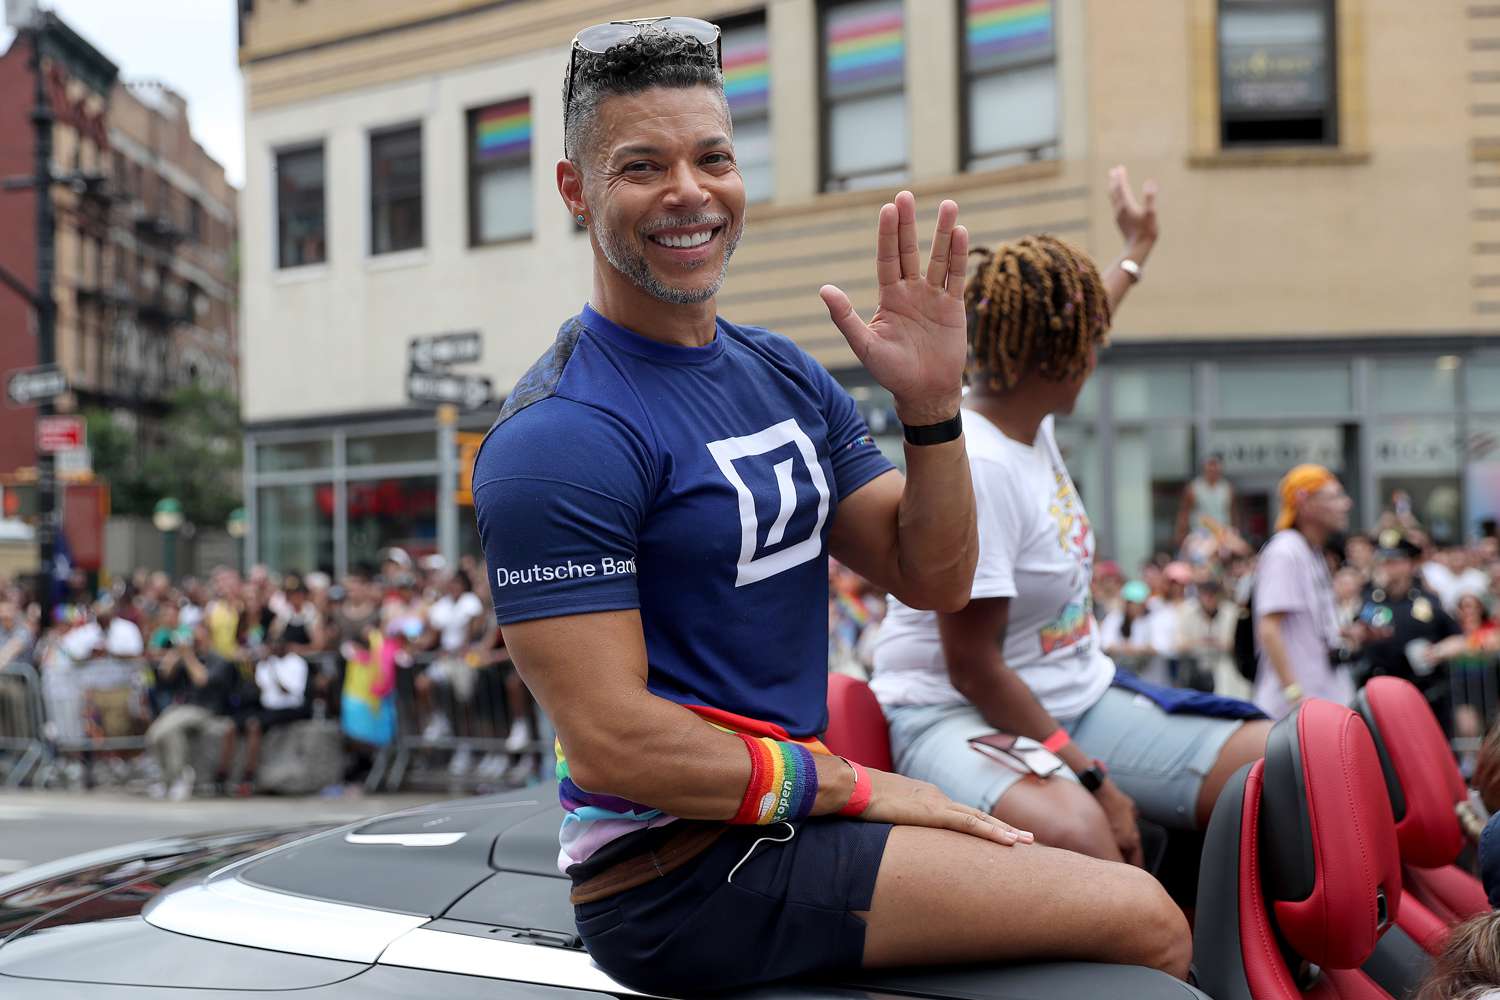 Wilson Cruz flashes paradegoers the Vulcan peace hand gesture during the annual New York City Pride March. Cruz, 